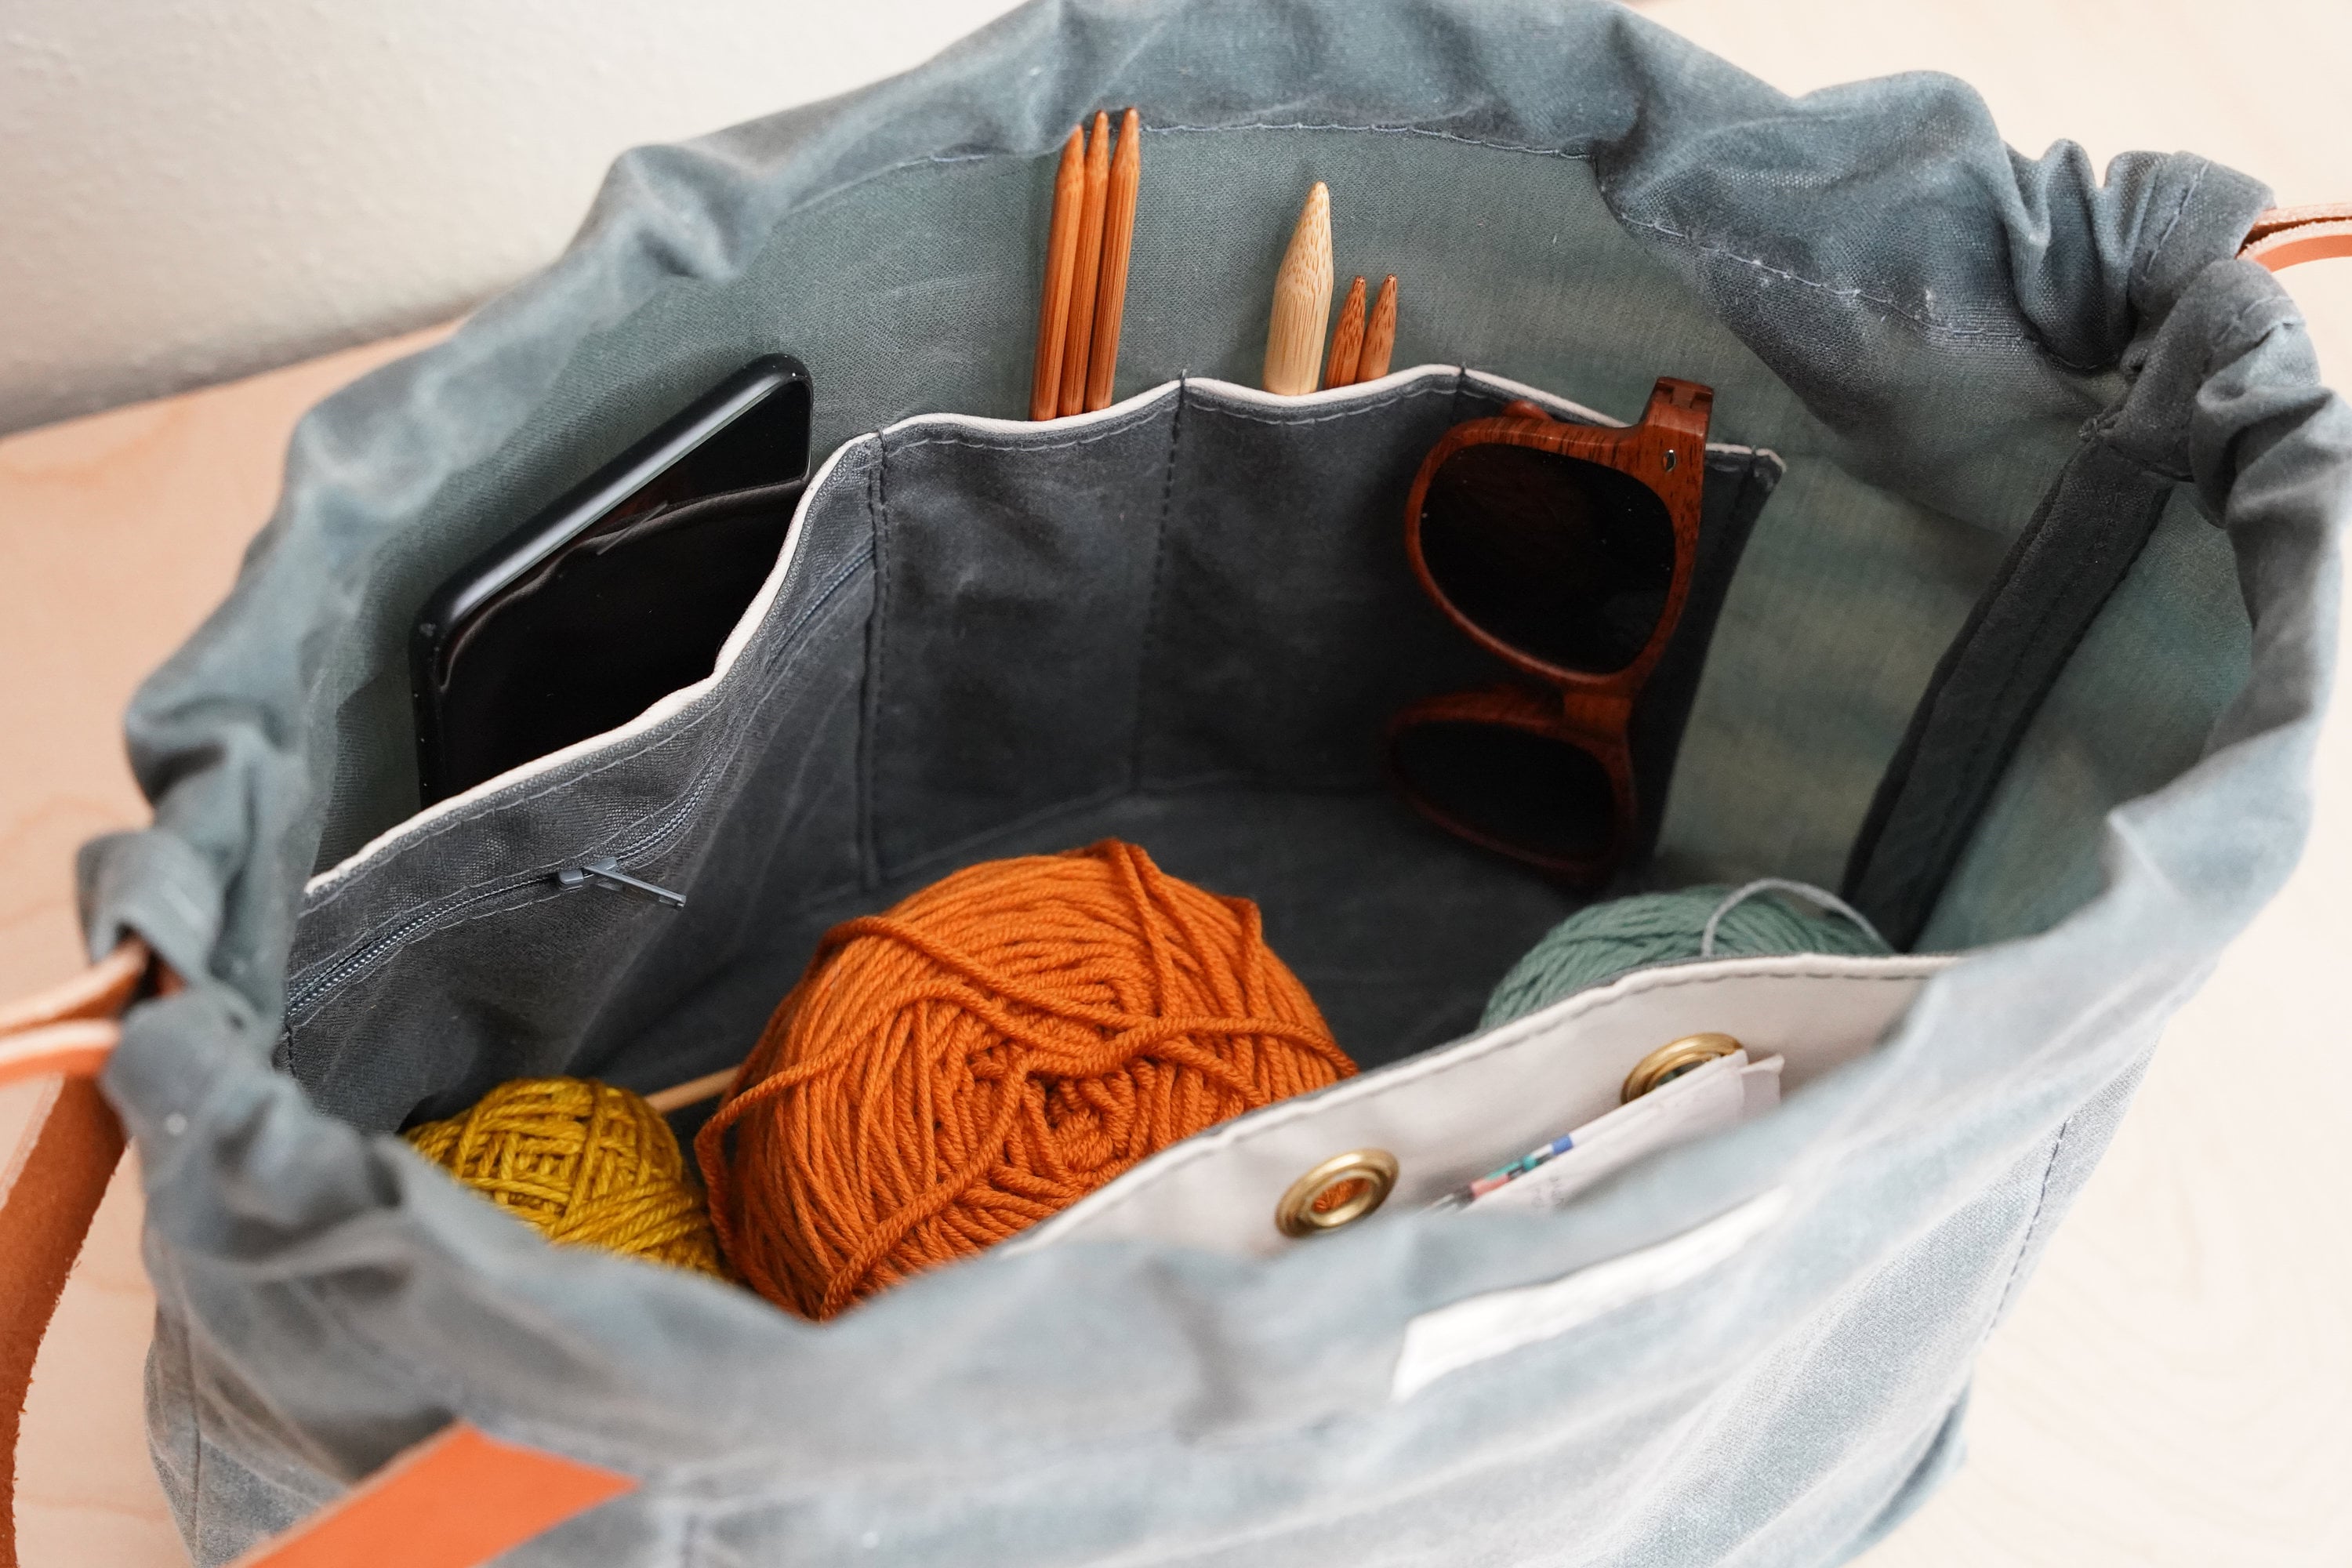 Knitting Bag - Project Bag - Grand-Maman